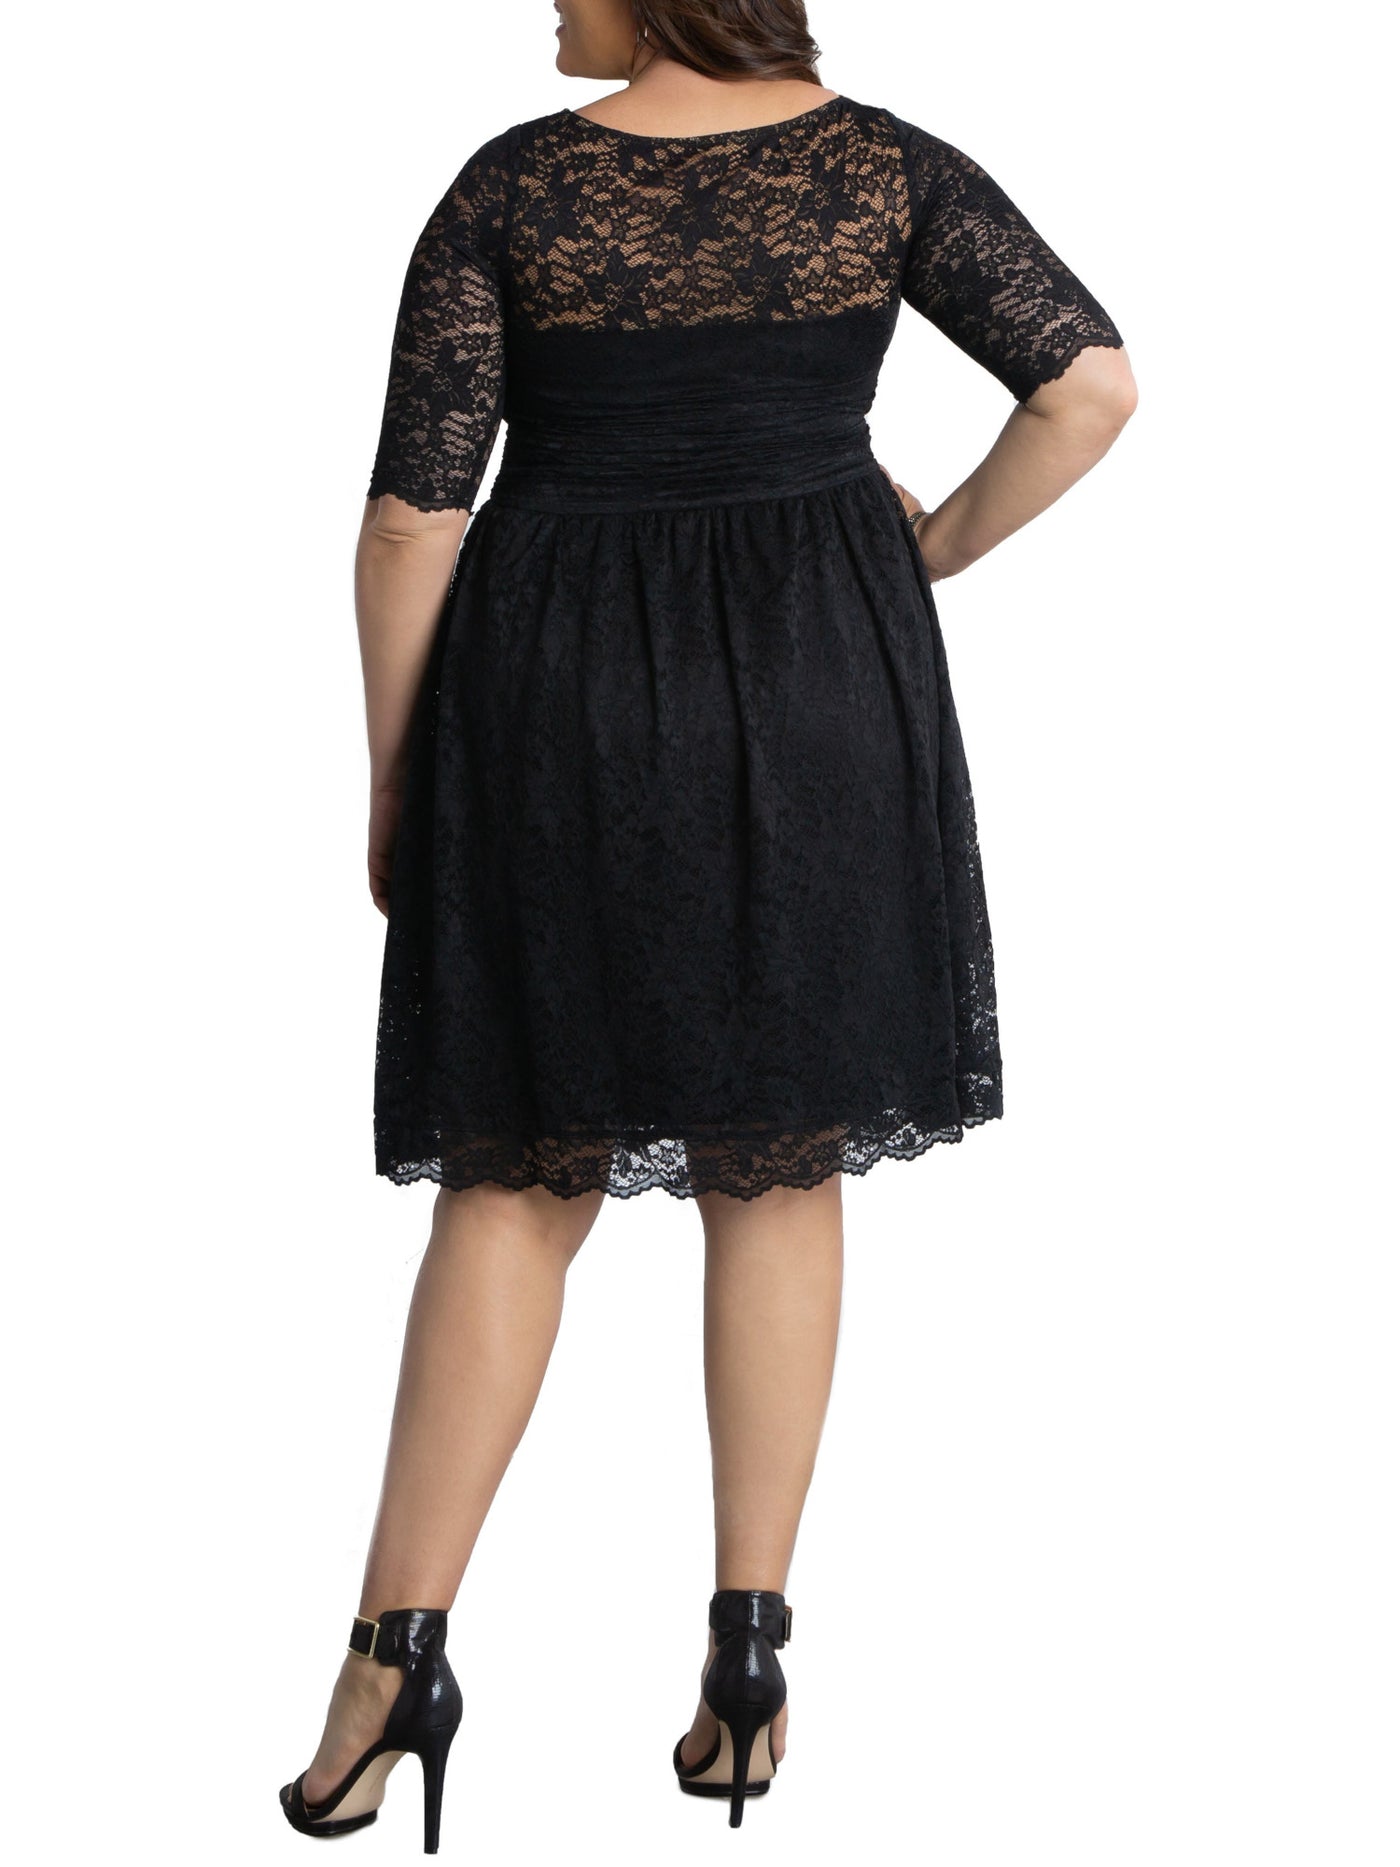 KIYONNA Womens Black Lace 3/4 Sleeve Boat Neck Knee Length Evening A-Line Dress Plus 1X